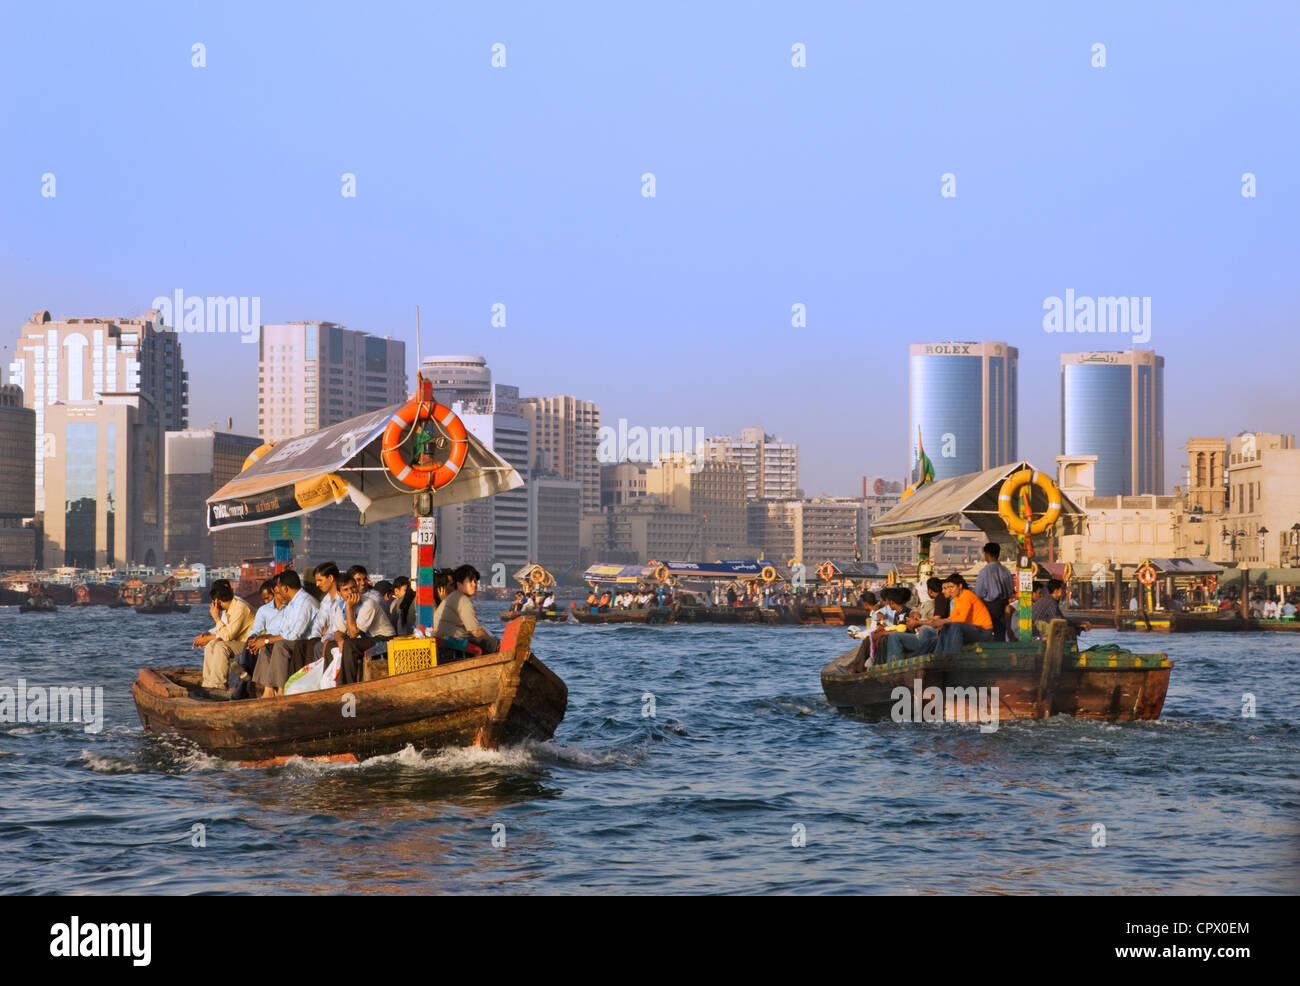 Ferry boats and skyline along Khor Dubai (Dubai Creek), Dubai, UAE Stock Photo